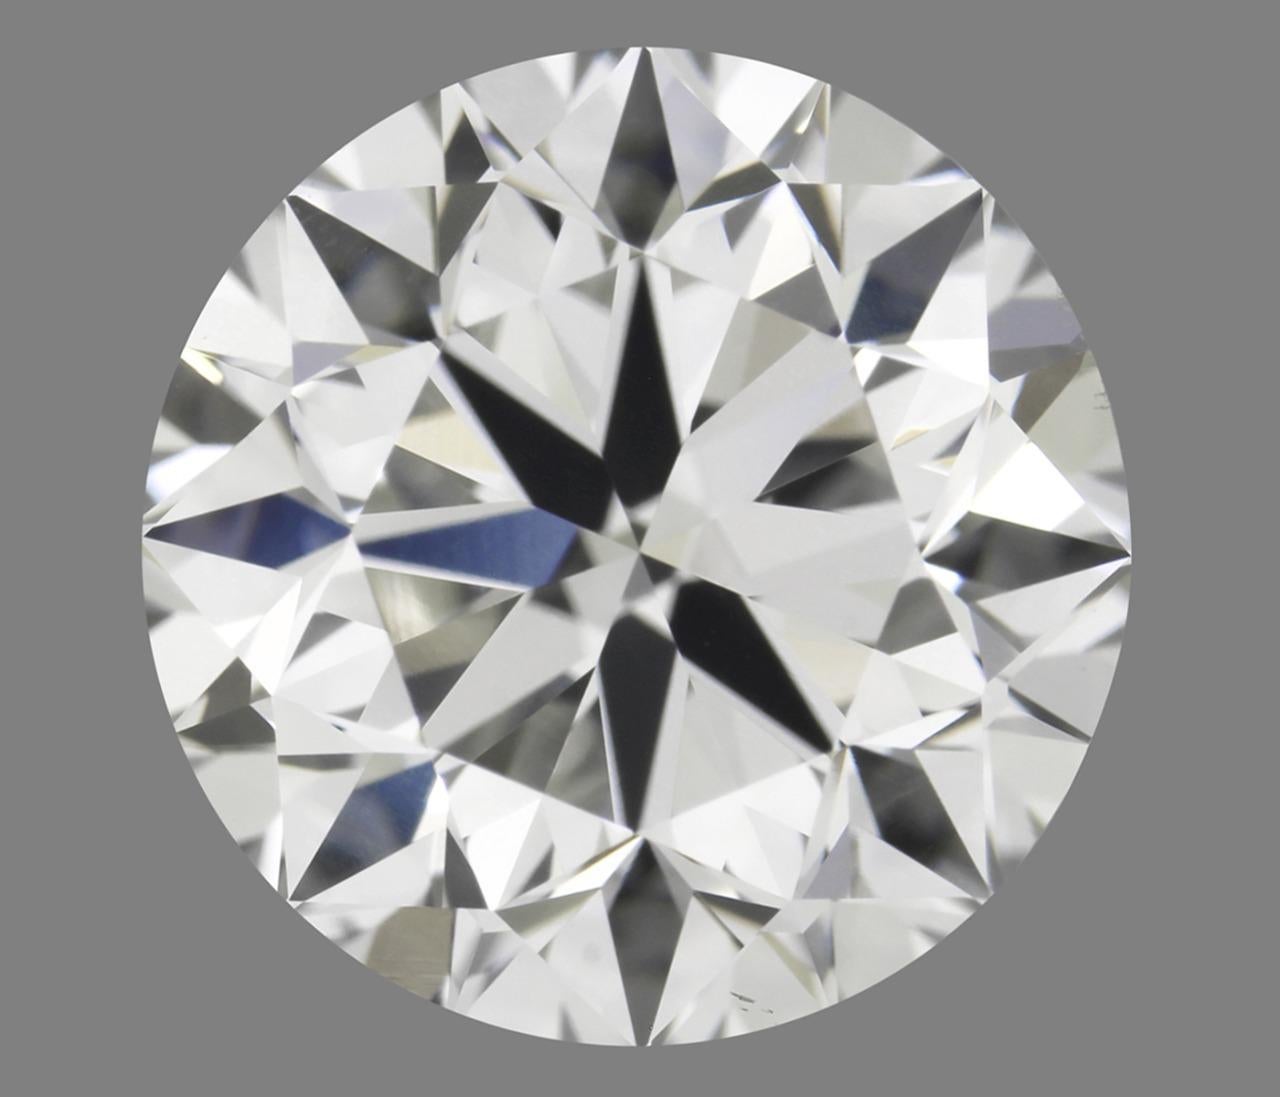 Perfect Diamonds Portfolio.
40 excellent, natural Diamonds with GIA Certificate

0.50ct-1.02ct., G-D/VVS2-FL.
27x 0.50-0.55ct.
13x 1.00-1.02ct.
 
Info:
5 C's:
Certificate: GIA
Carat: 0.50ct-1.02ct
Color: G-D
Clarity: VVS2-FL(Flawless, Internally